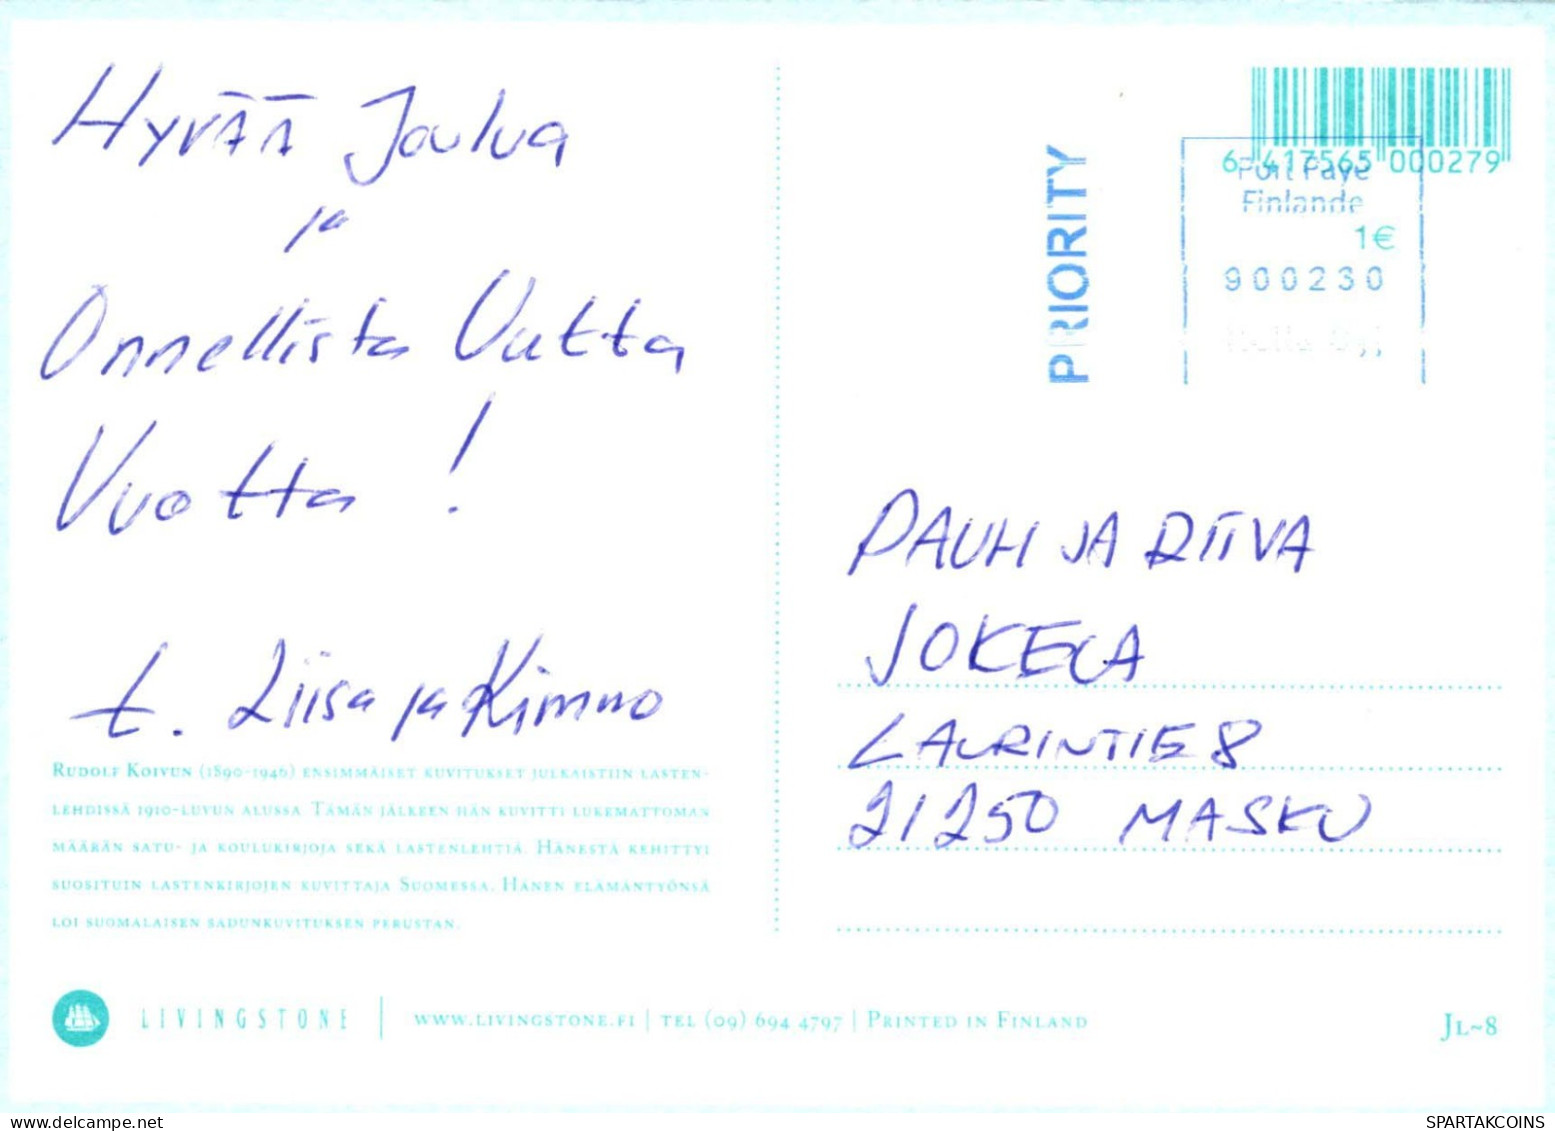 Jungfrau Maria Madonna Jesuskind Religion Vintage Ansichtskarte Postkarte CPSM #PBQ017.A - Vierge Marie & Madones